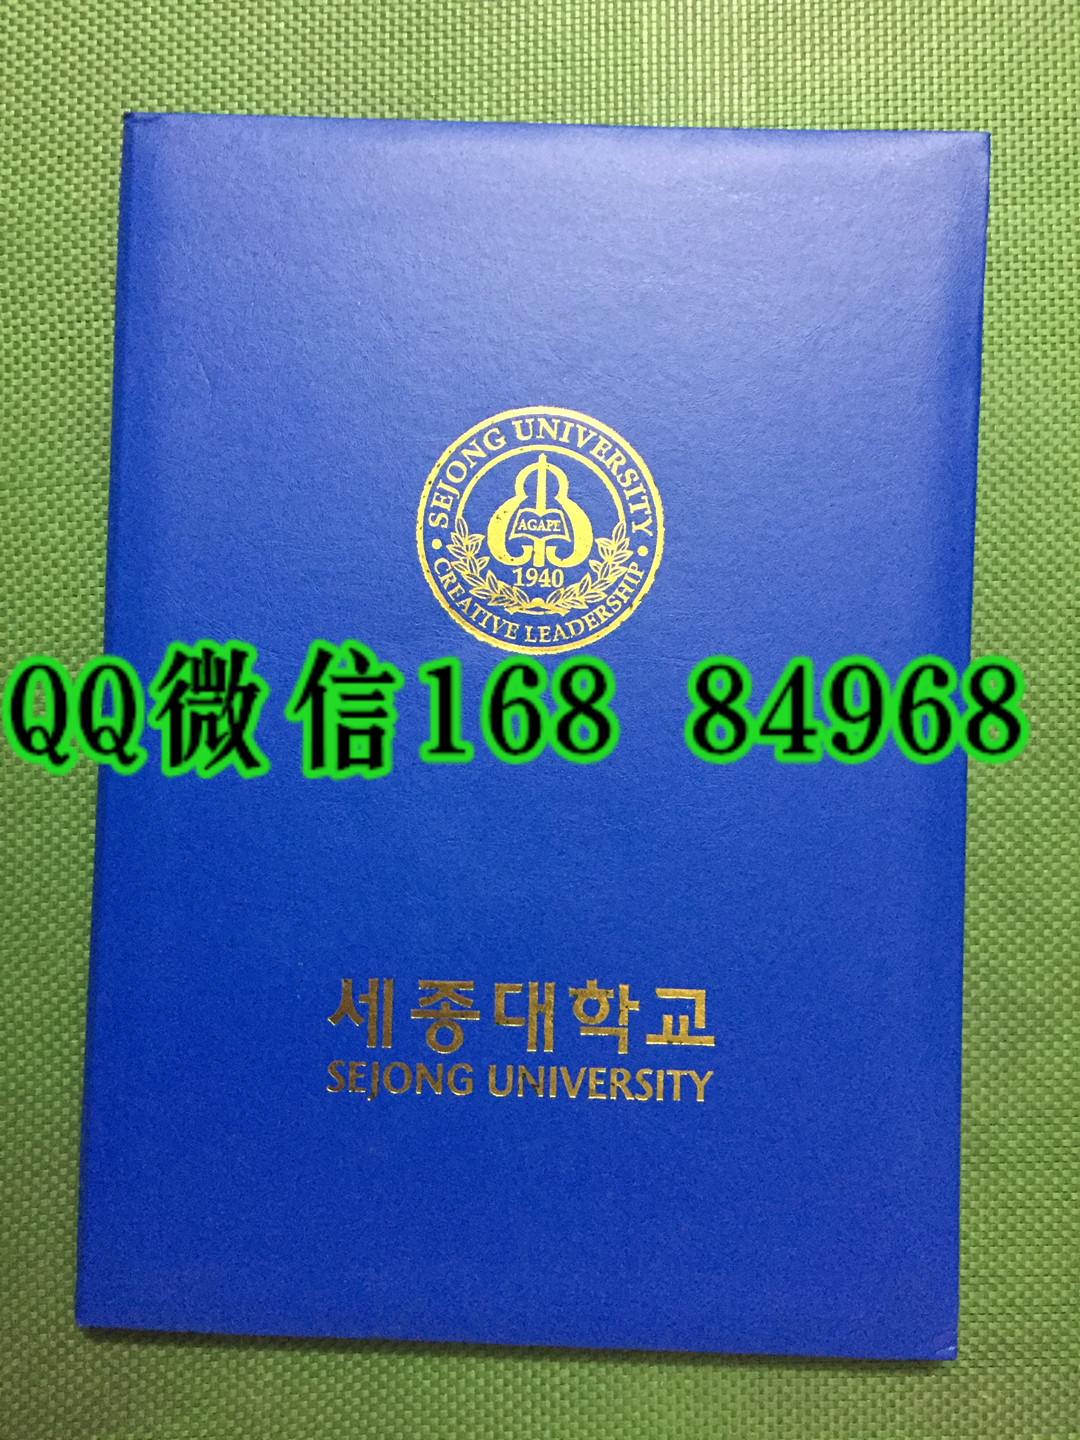 韩国世宗大学毕业证外壳，sejong university diploma Cover